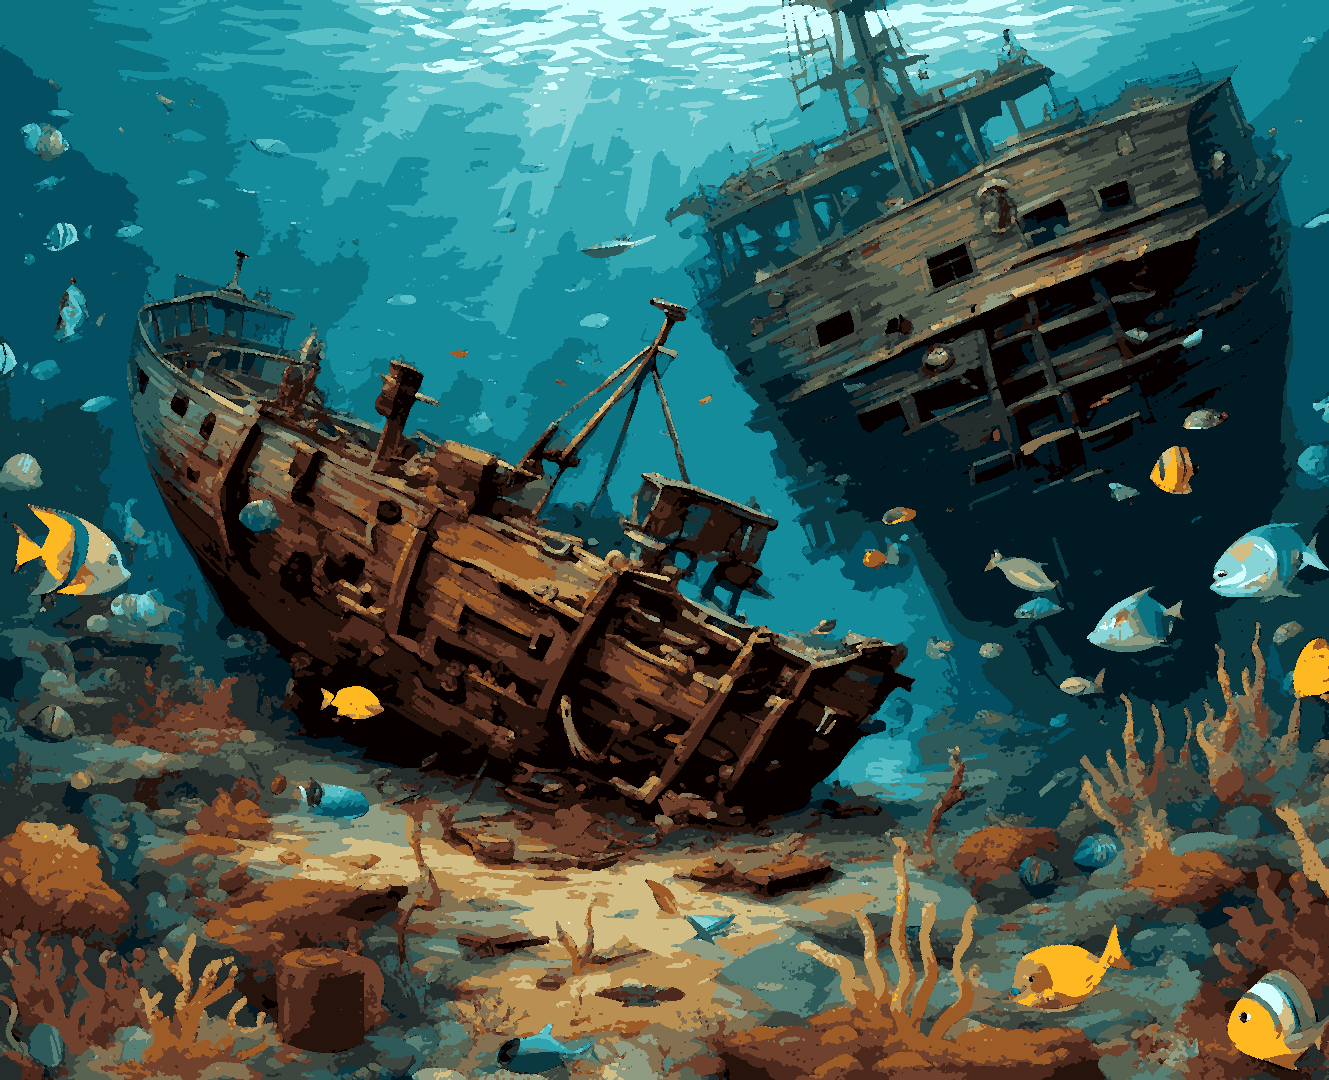 Sunken Shipwreck (2) - Van-Go Paint-By-Number Kit